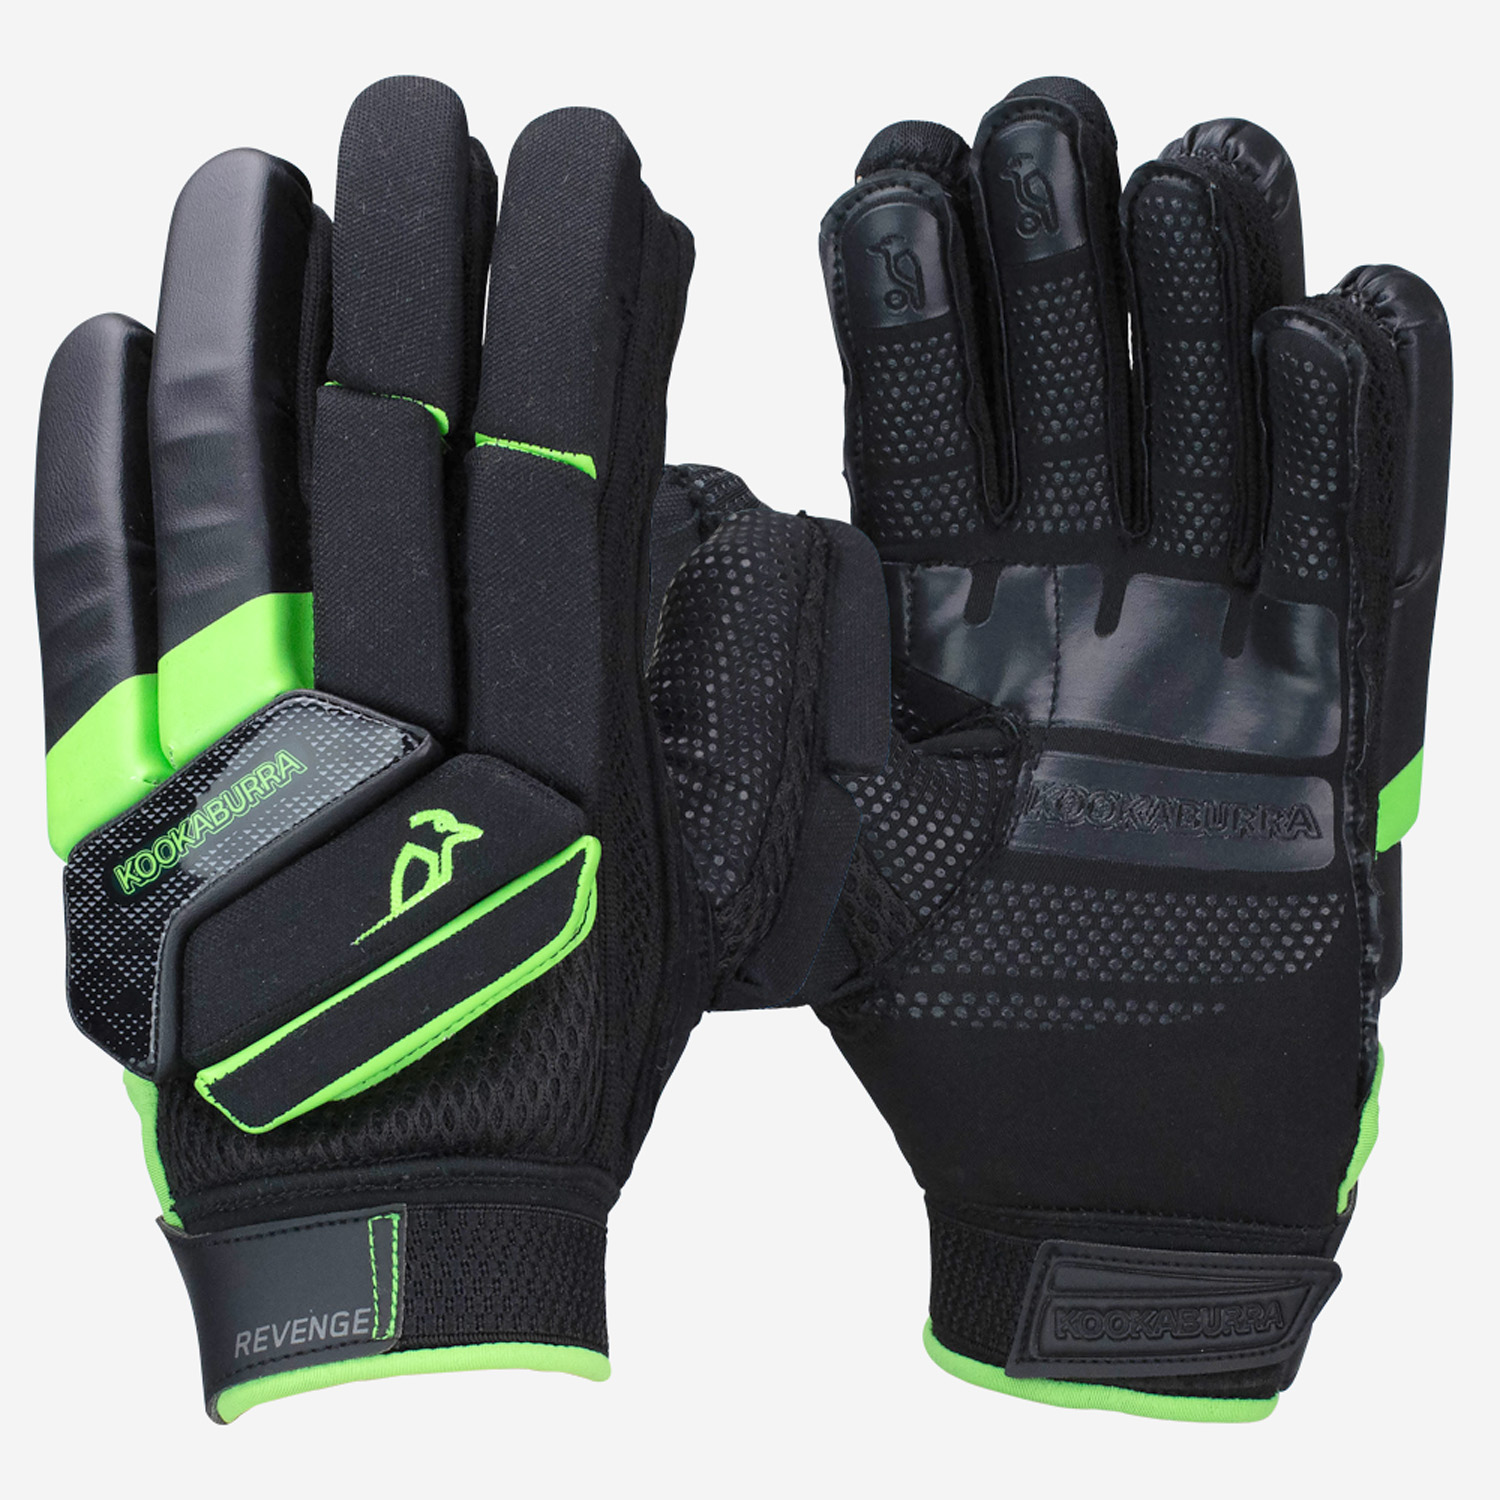 KOOKABURRA 2018 Xenon Field Hockey Fingerless Hand Glove Protection Lime Green